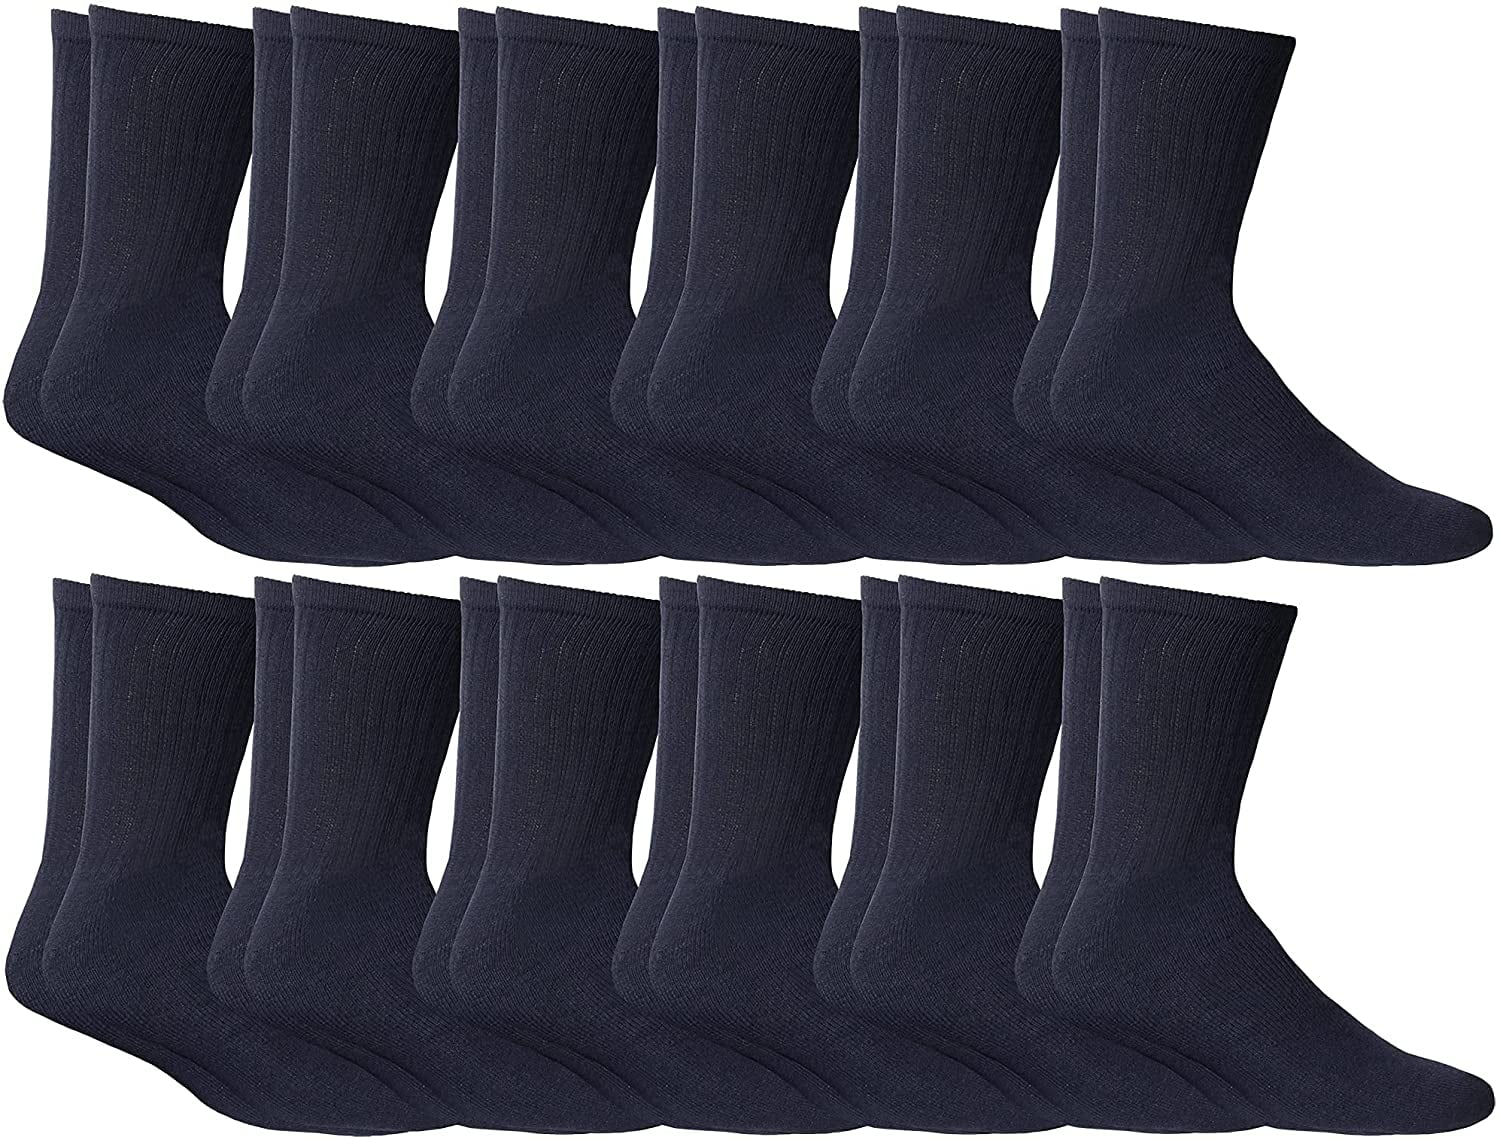 NAVYSPORT Mens Solid Cushion Comfort Cotton Crew Socks Pack of 5 Pairs 